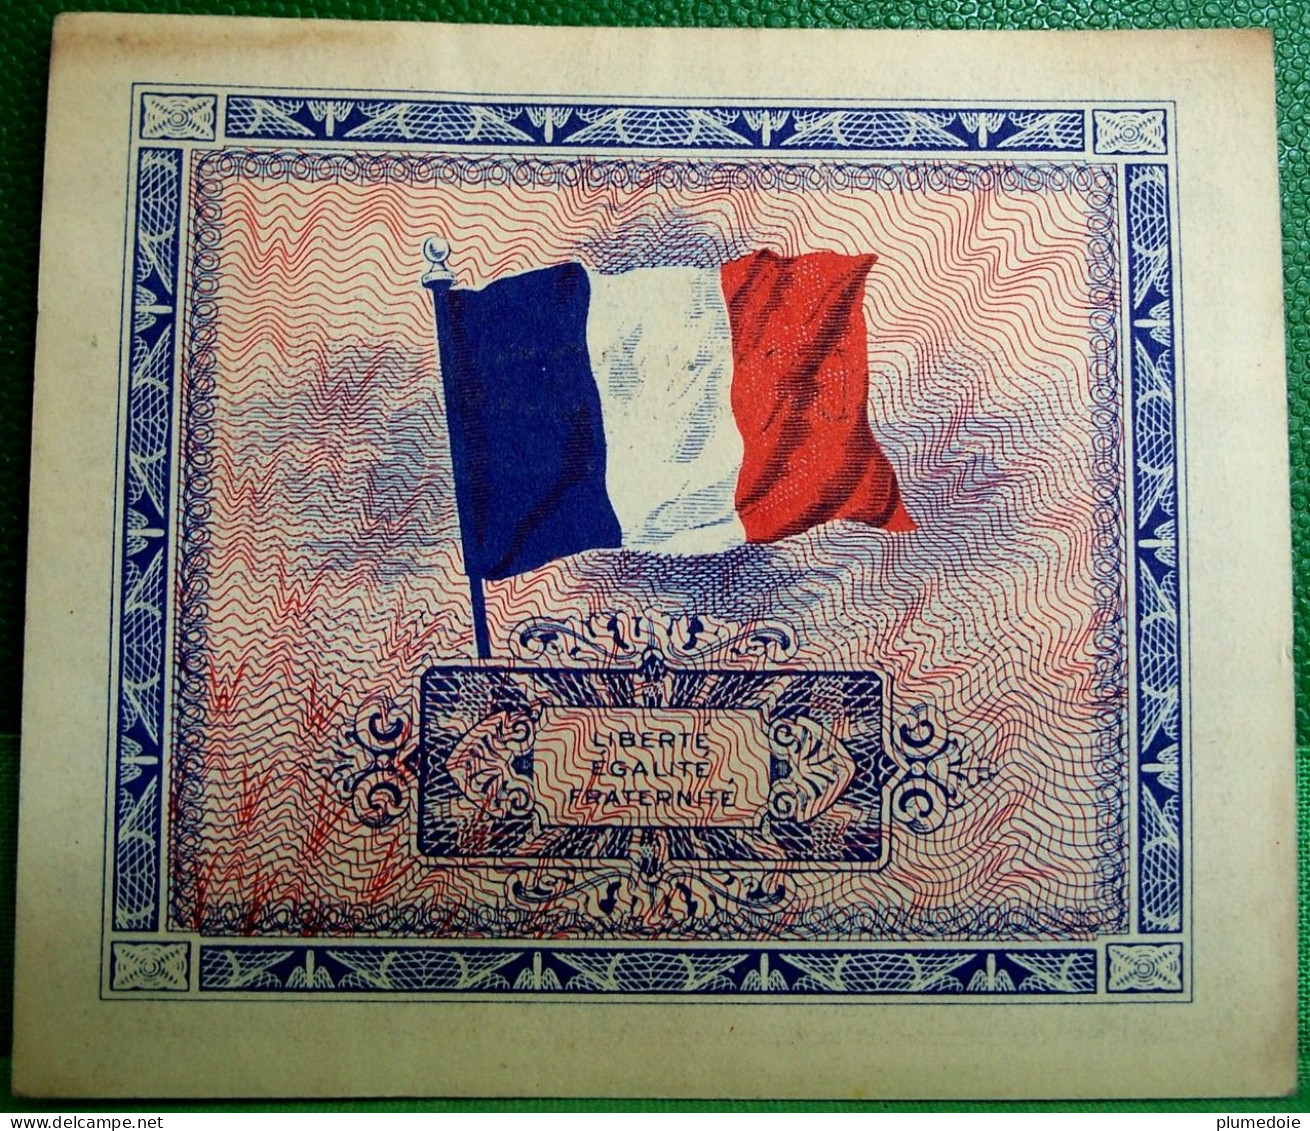 BILLET 5 Francs FRANCE 1944 DRAPEAU   French Banknote FRANCE  WW2 DEBARQUEMENT - 1944 Drapeau/Francia